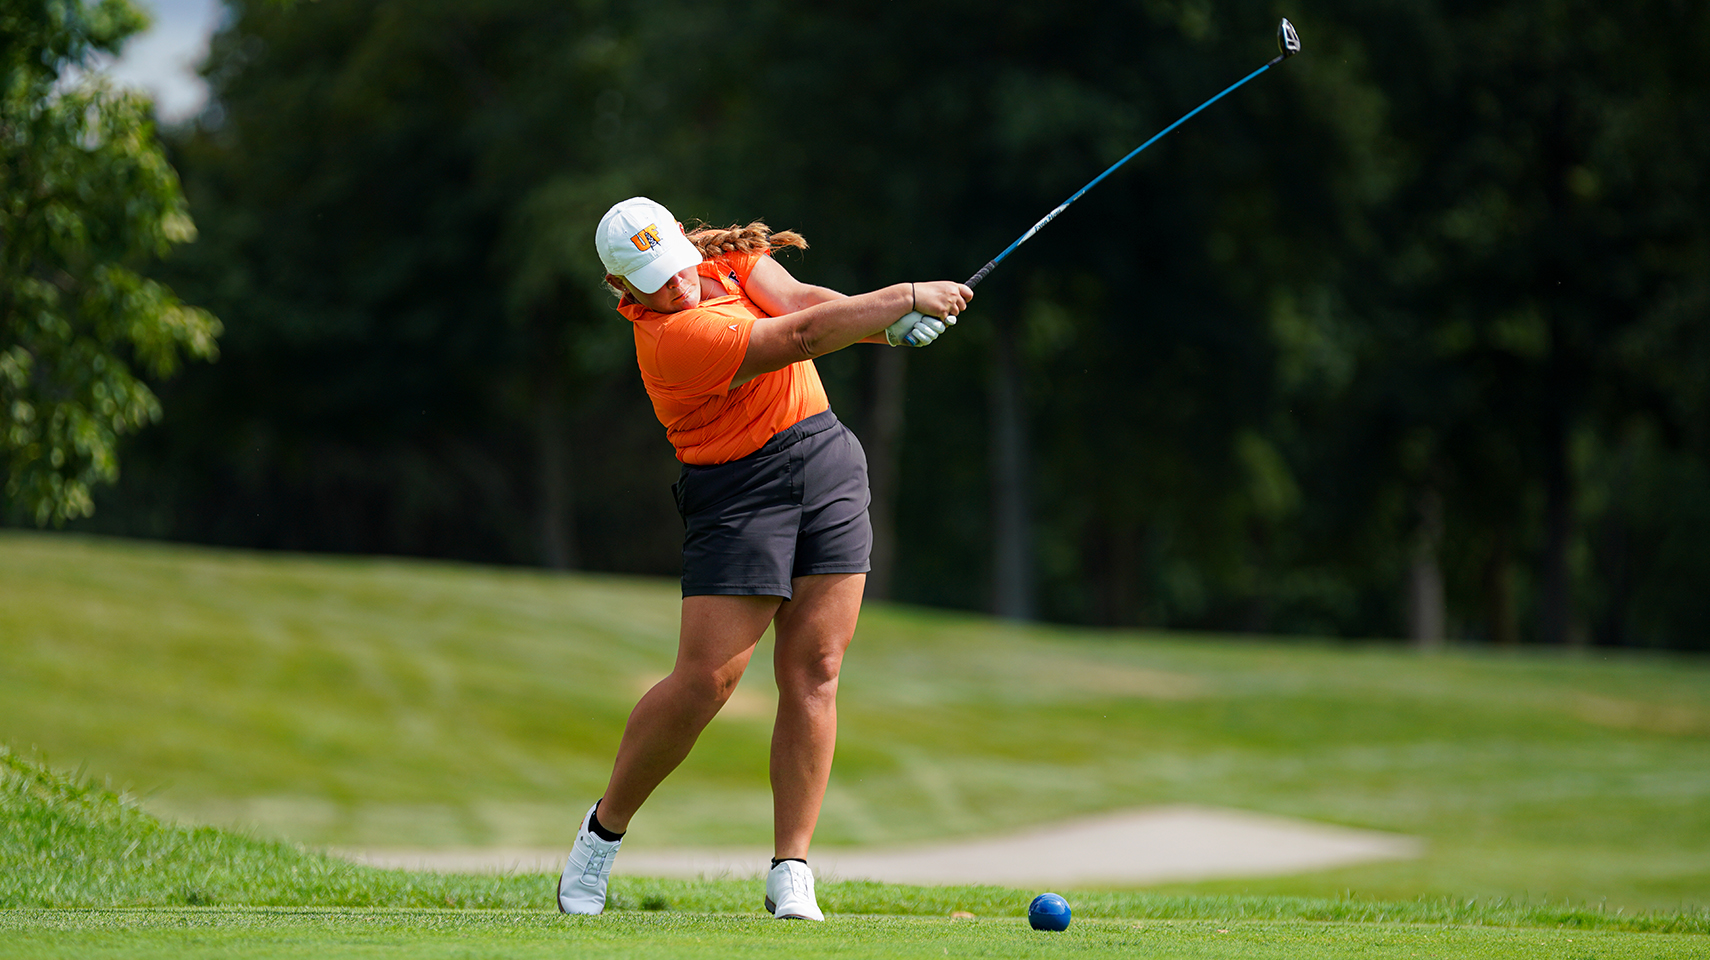 women's golf hitting driver off the tee in an orange shirt